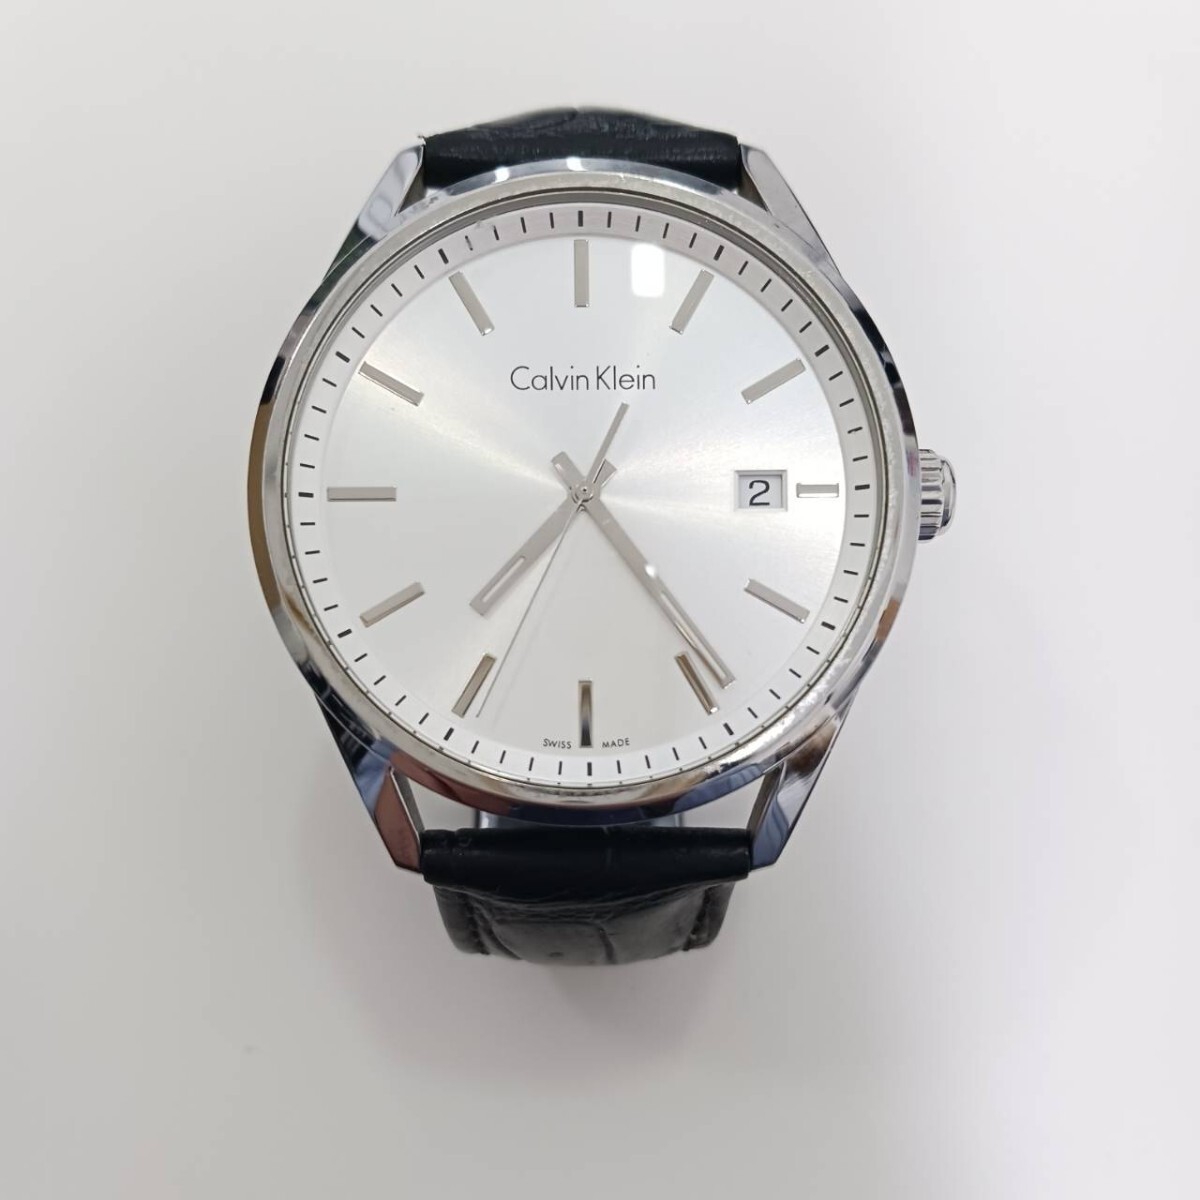  Calvin Klein Calvin Klein наручные часы неподвижный 